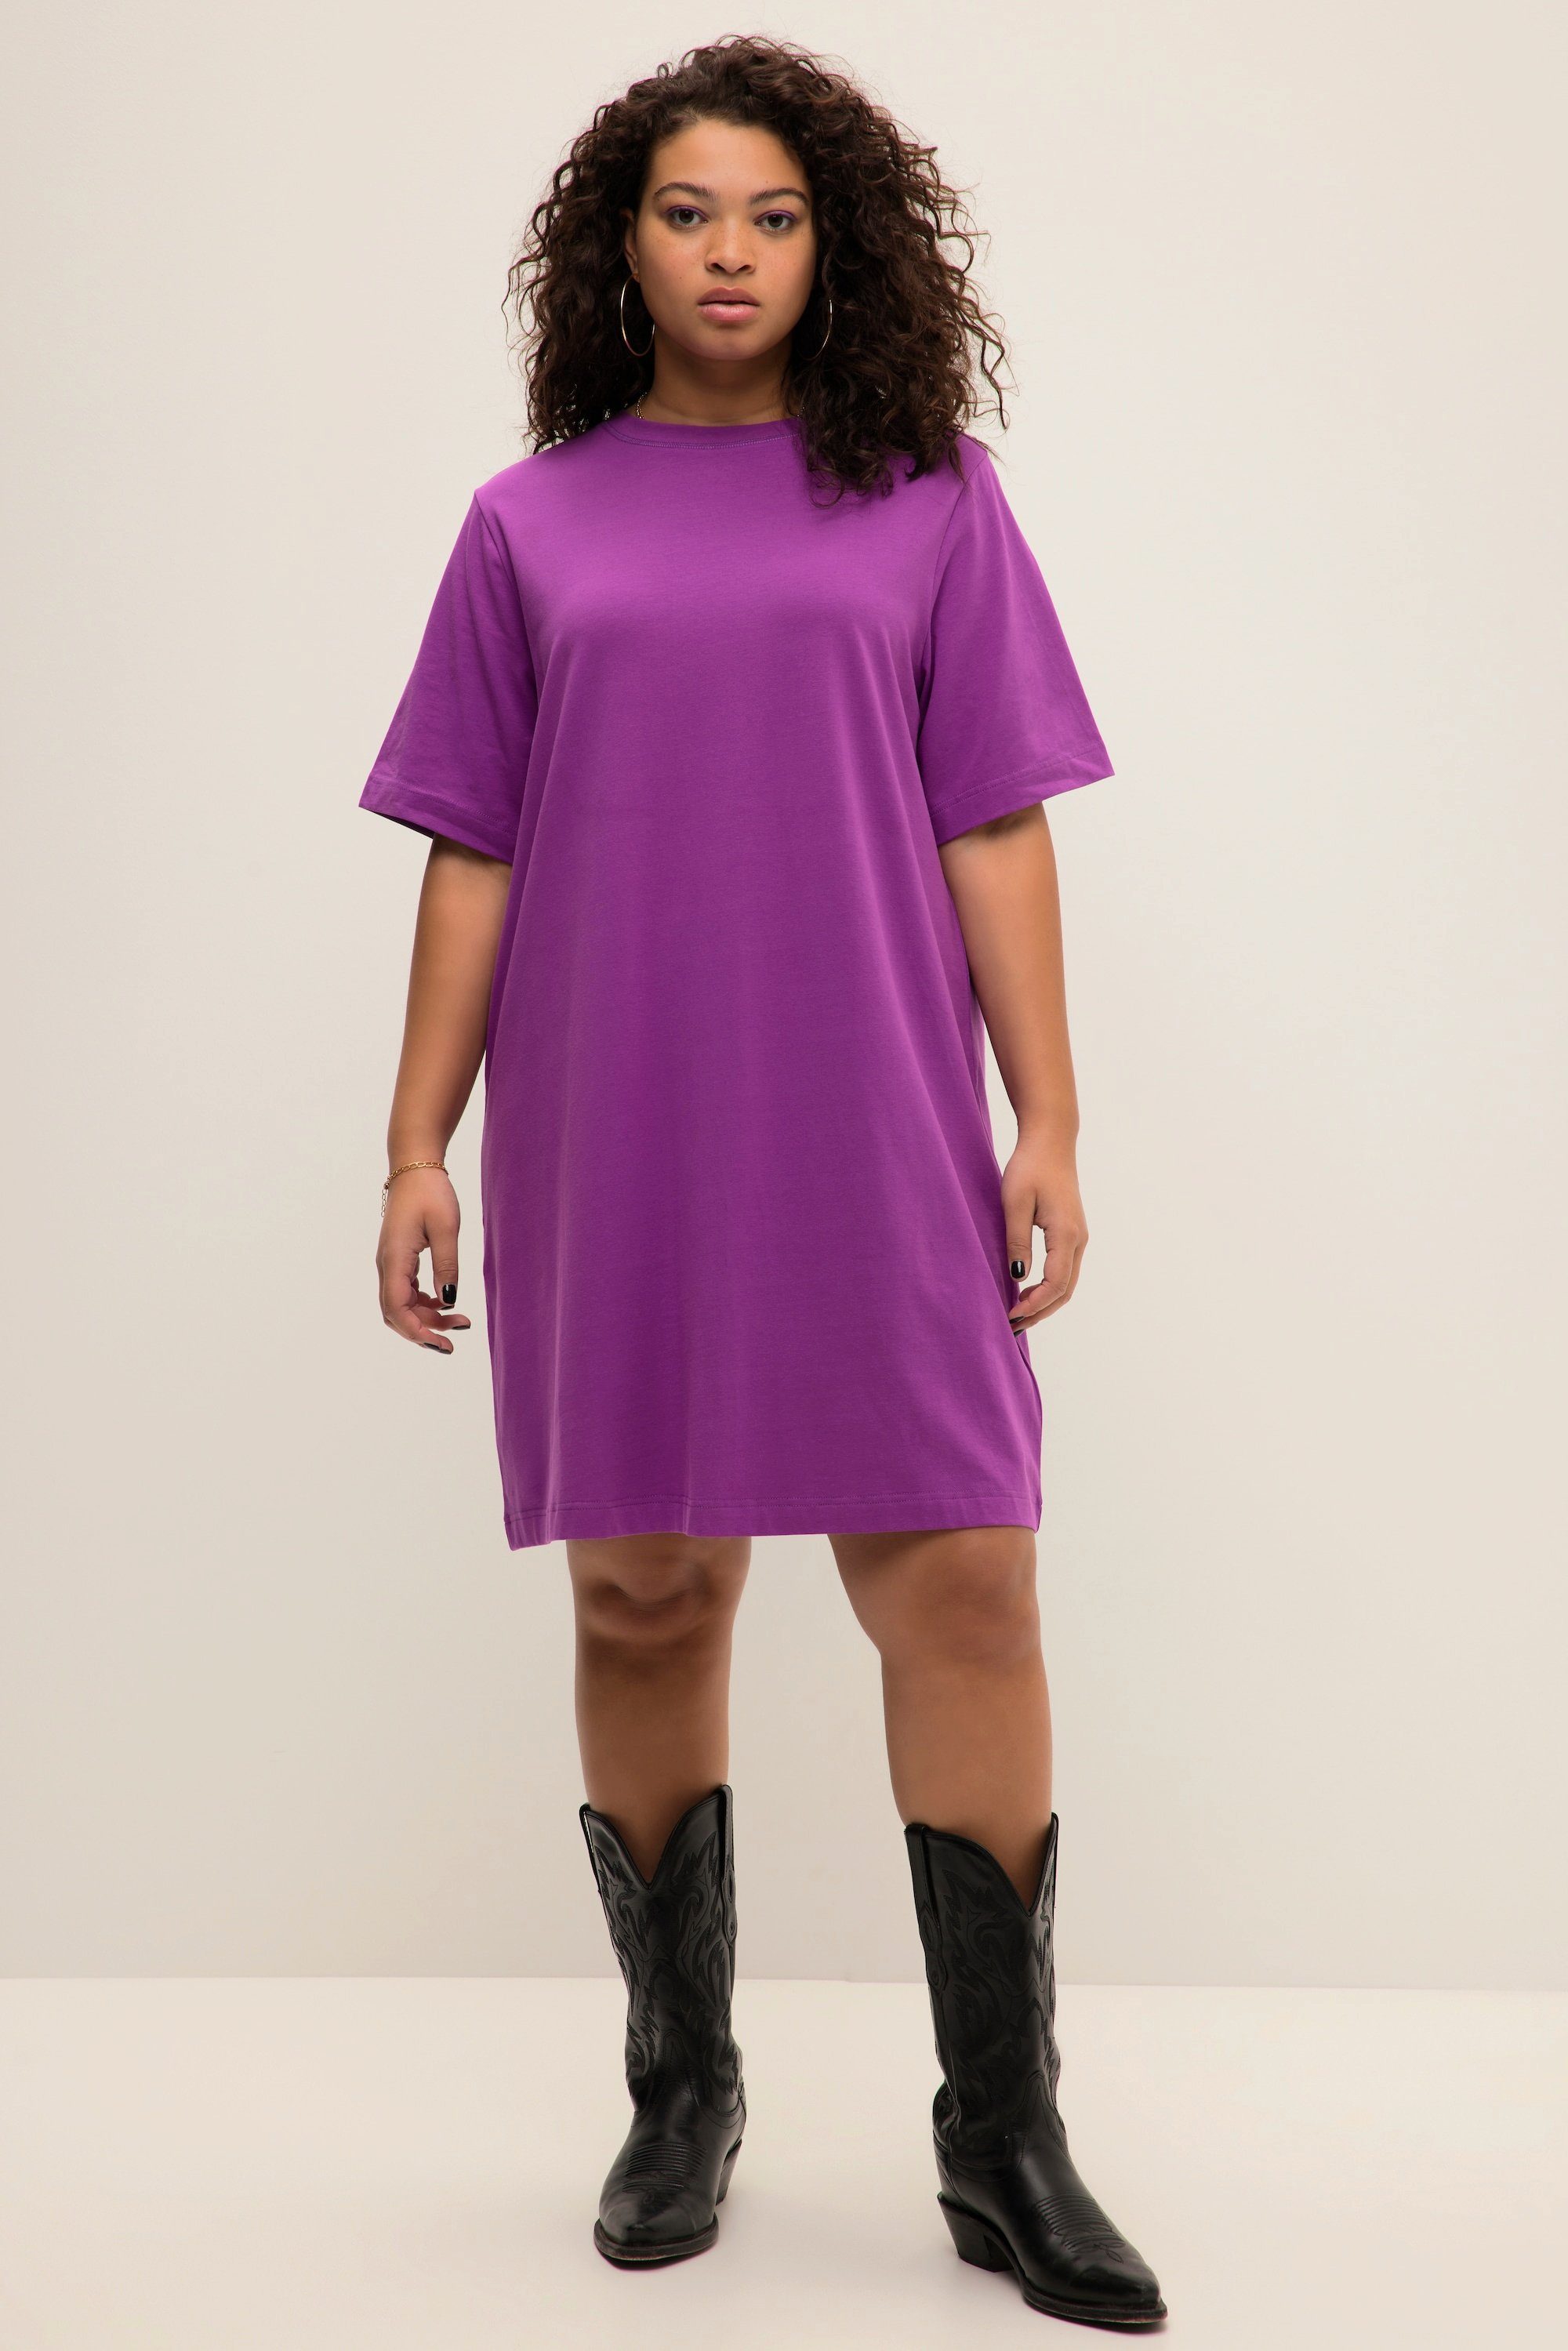 Studio Untold Longshirt Extra Longshirt Rundhals Halbarm Oversized violett